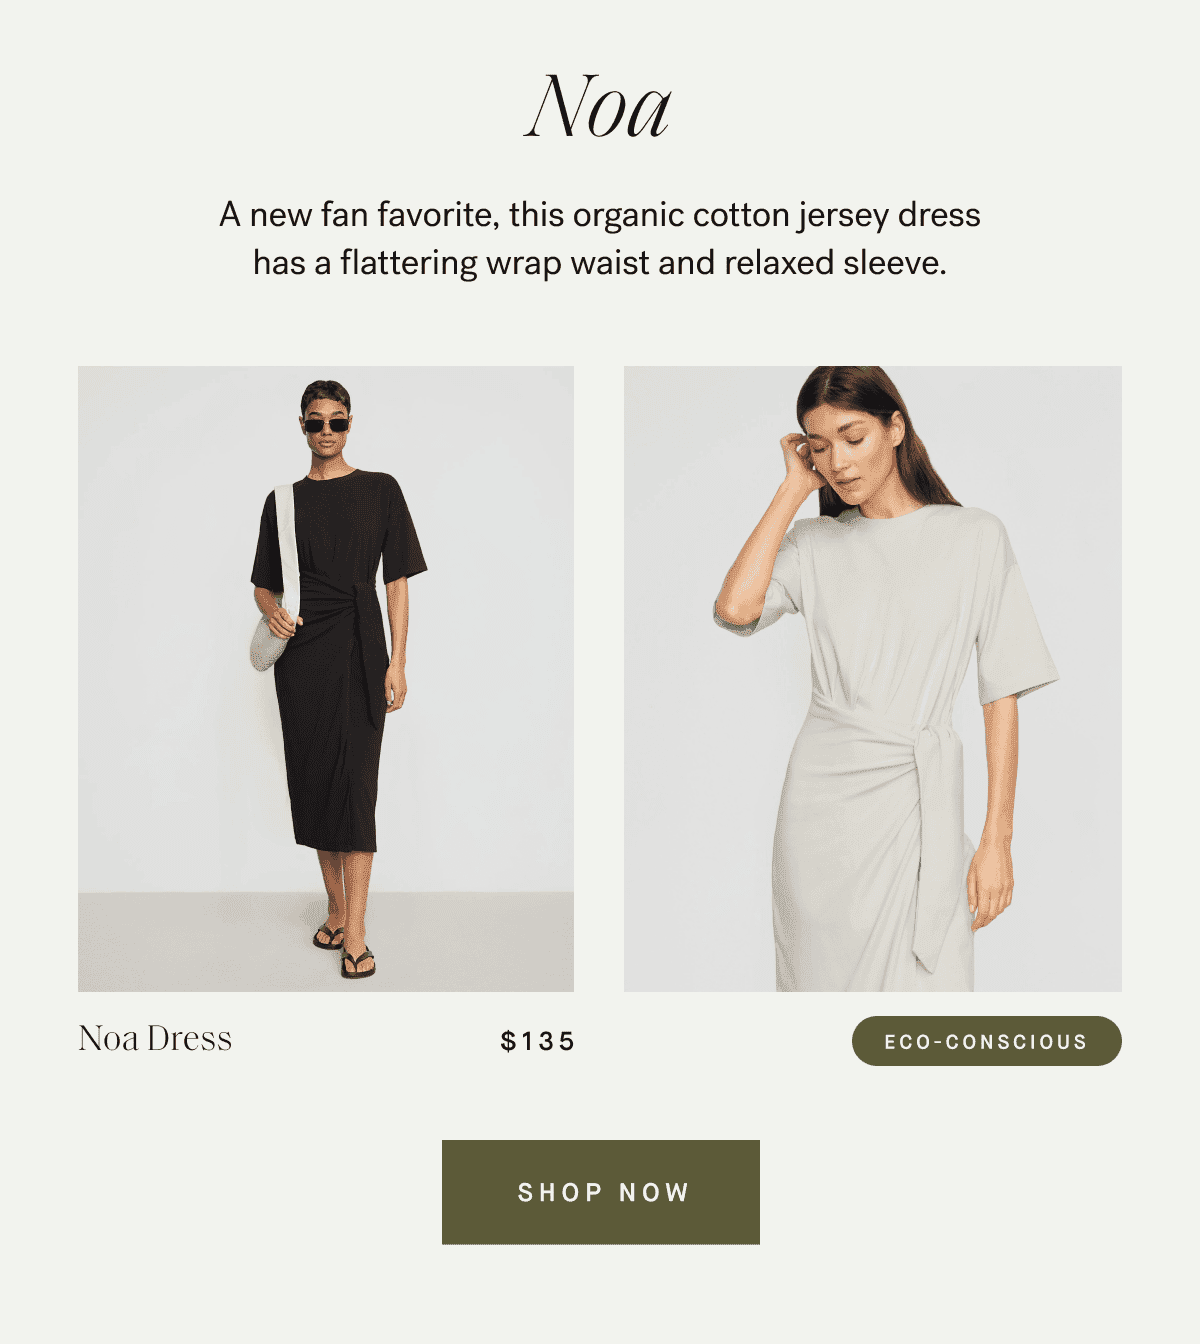 Noa —\xa0A new fan favorite, this organic cotton jersey dress has a flattering wrap waist and relaxed sleeve.